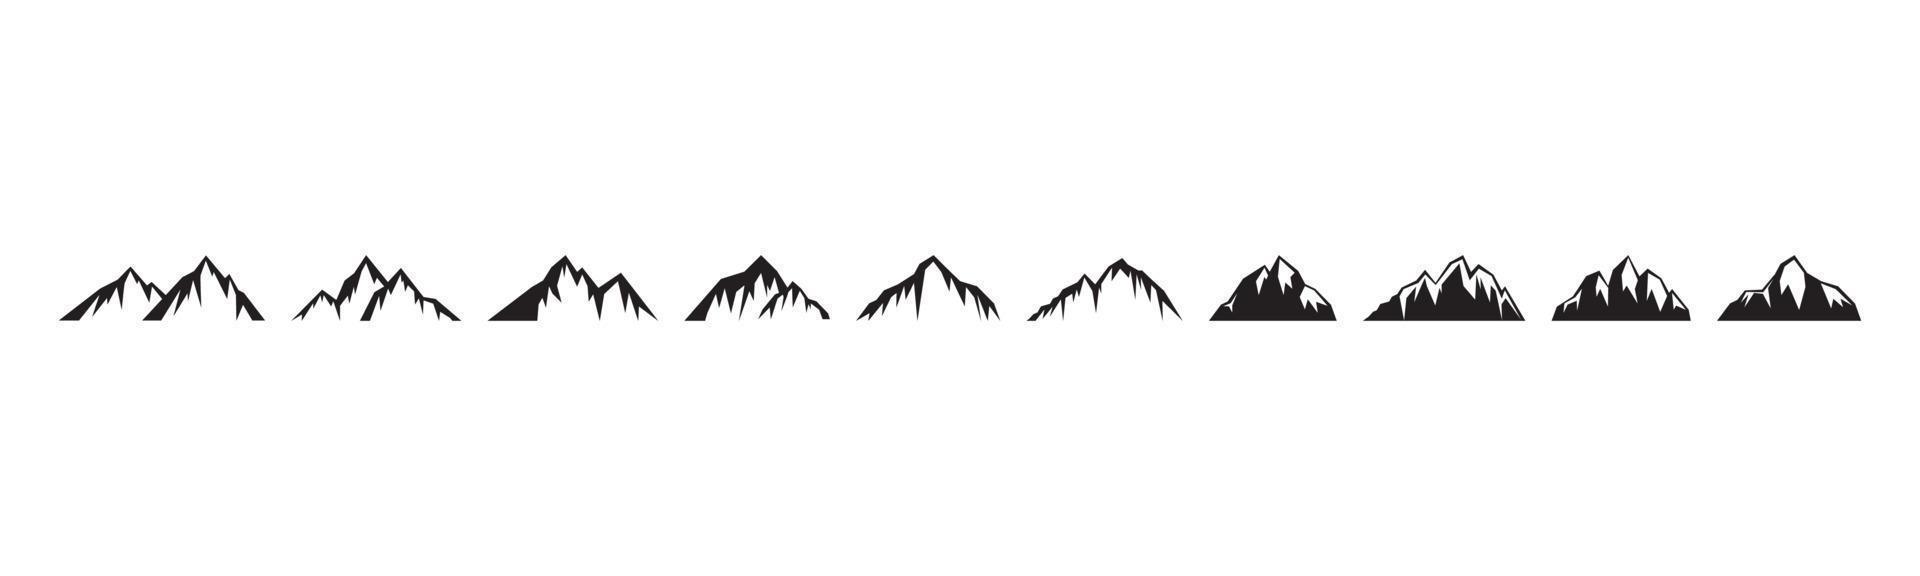 Mountain icon set design template vector illustration